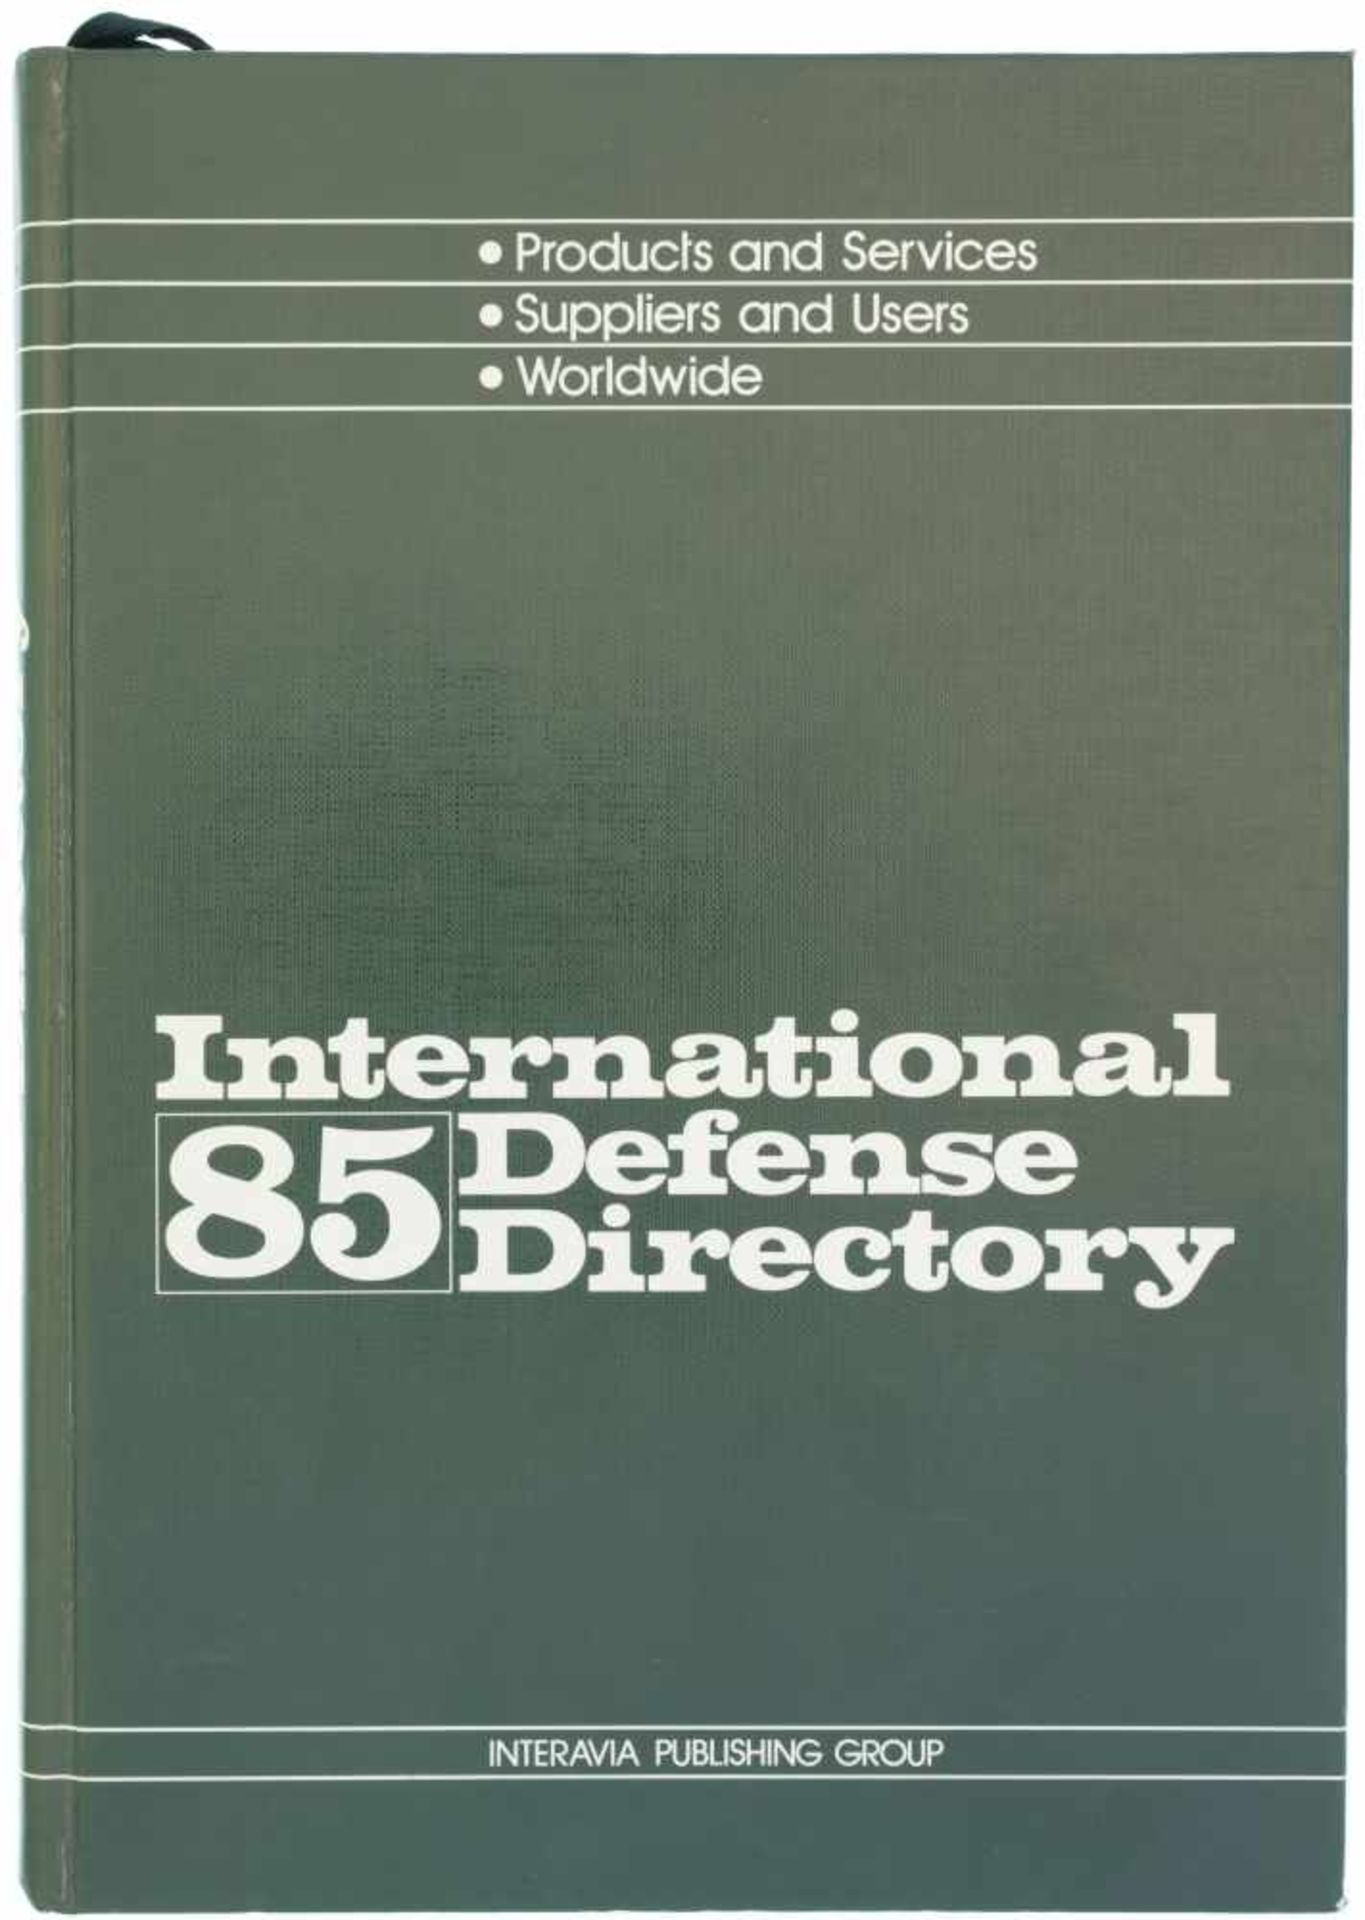 International Defense Directory 85 Autor C.E. Howard, 1984, 701 Seiten, Interavia Publishing